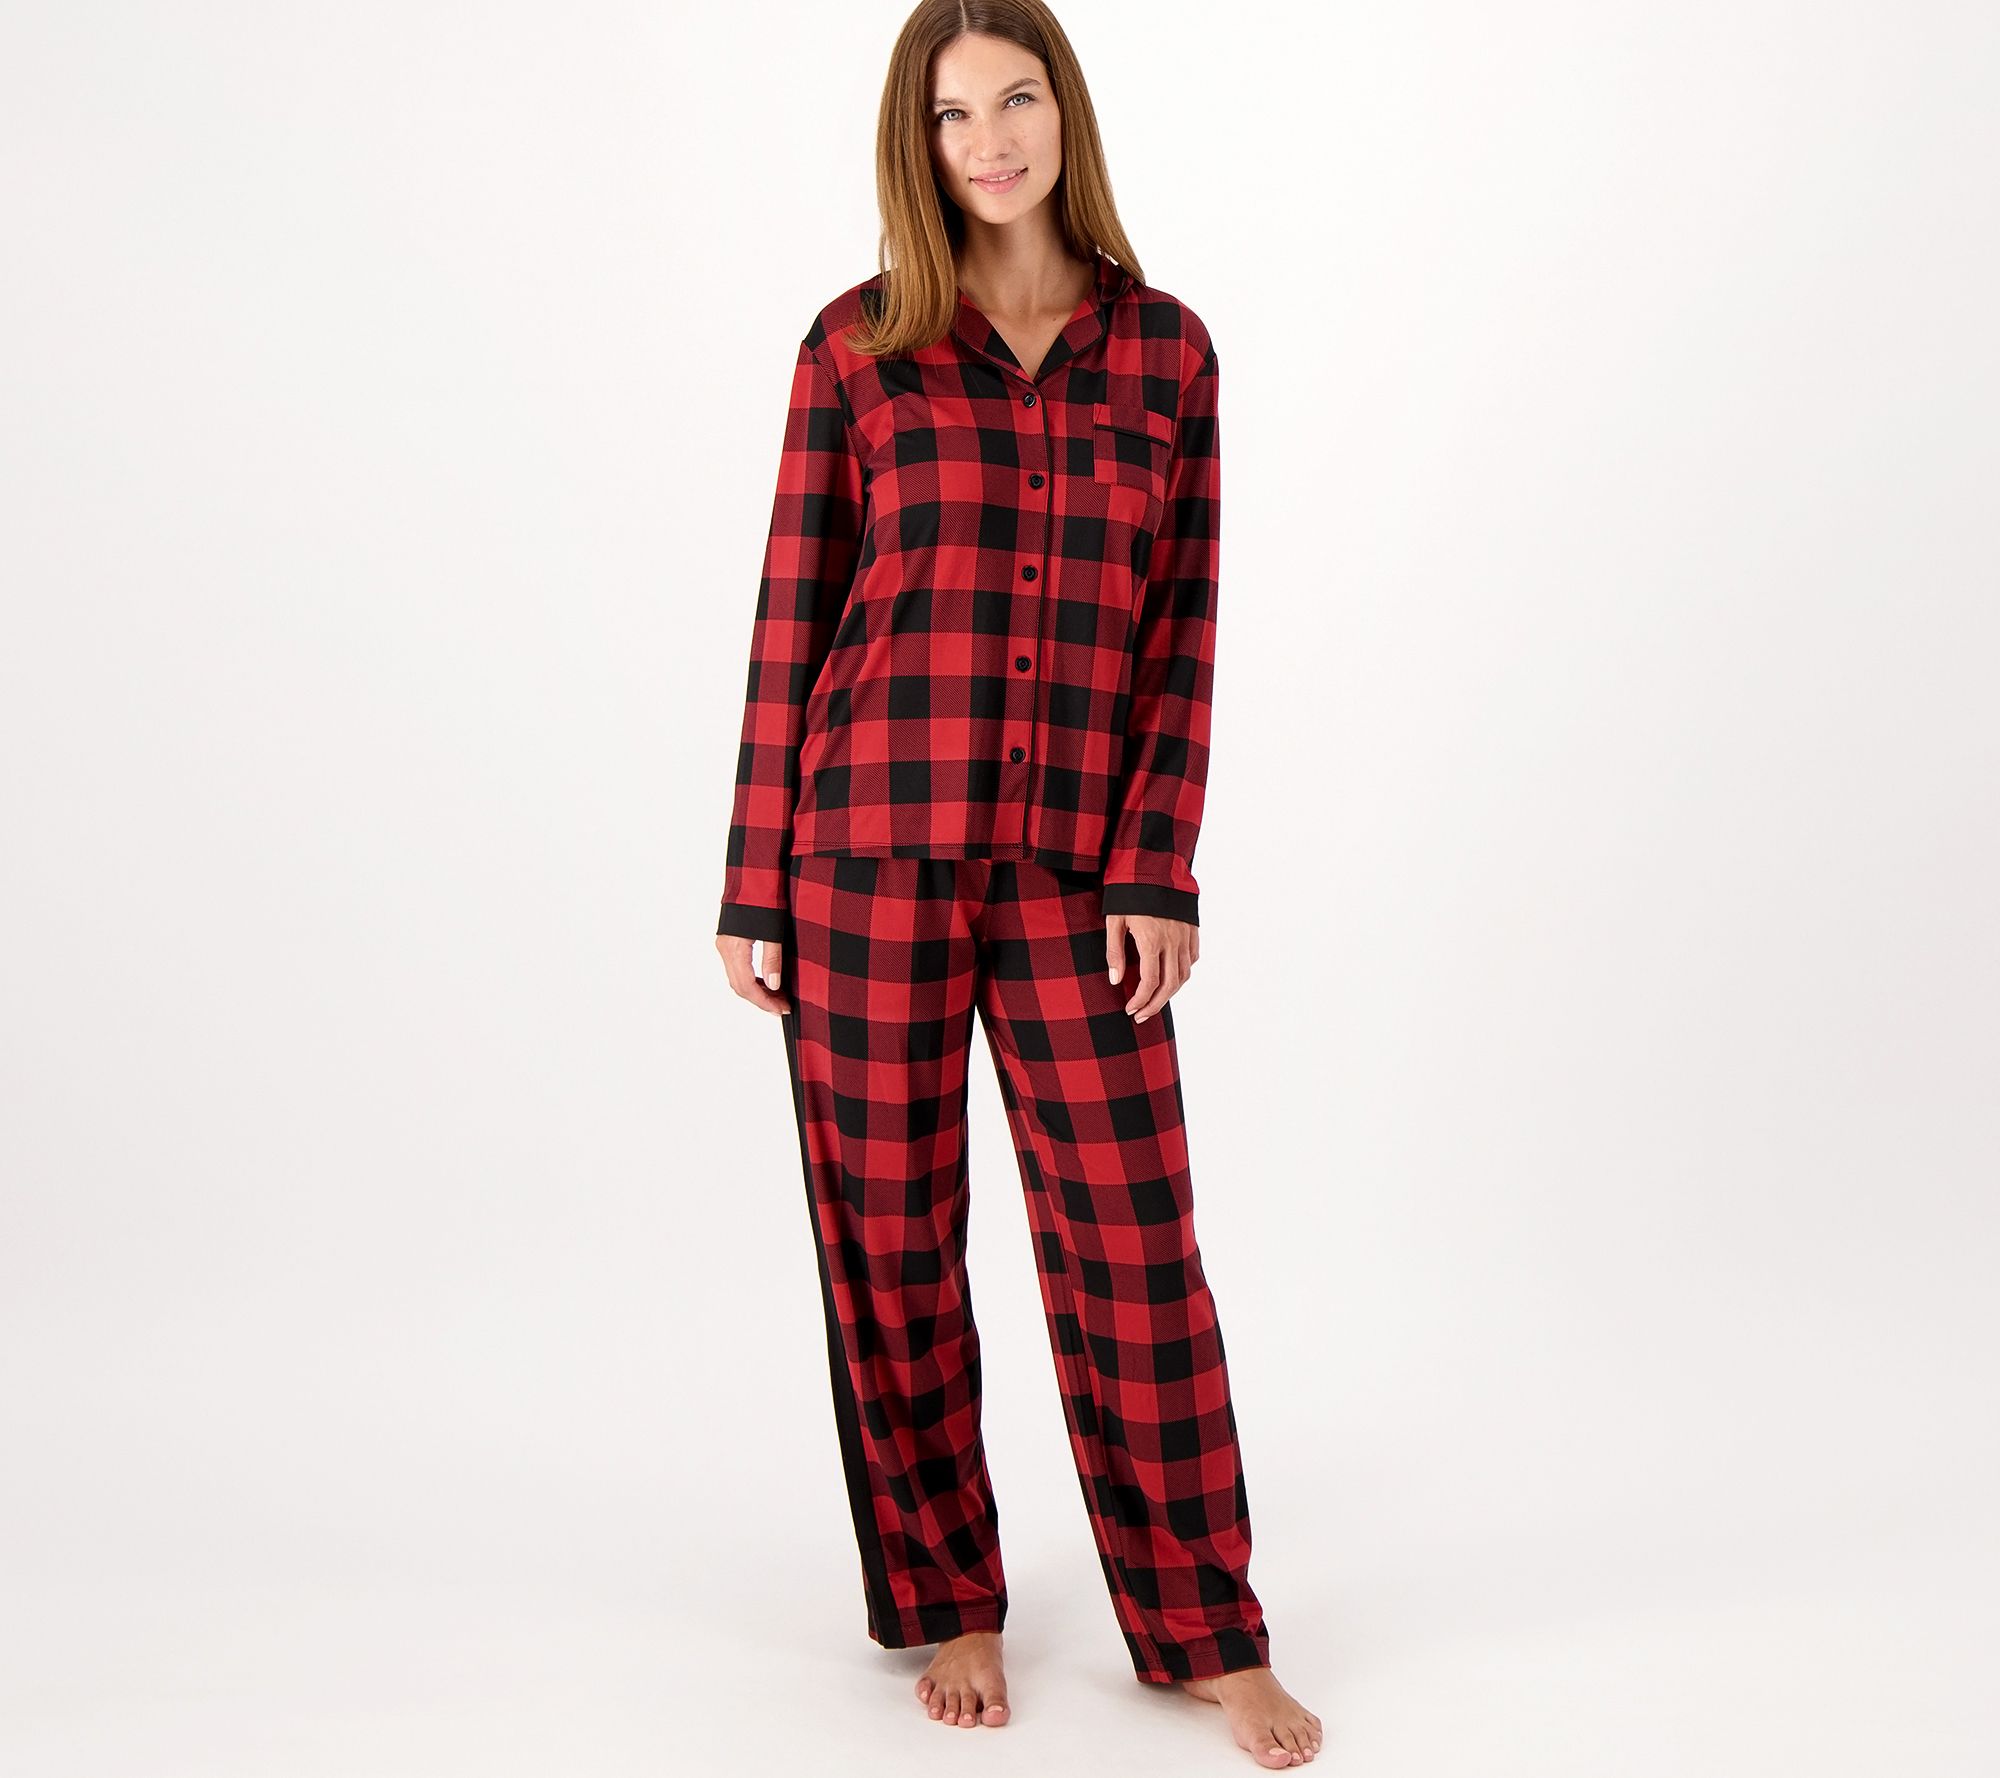 Cuddl Duds Fleecewear with Stretch Tall Jogger Pajama Set 